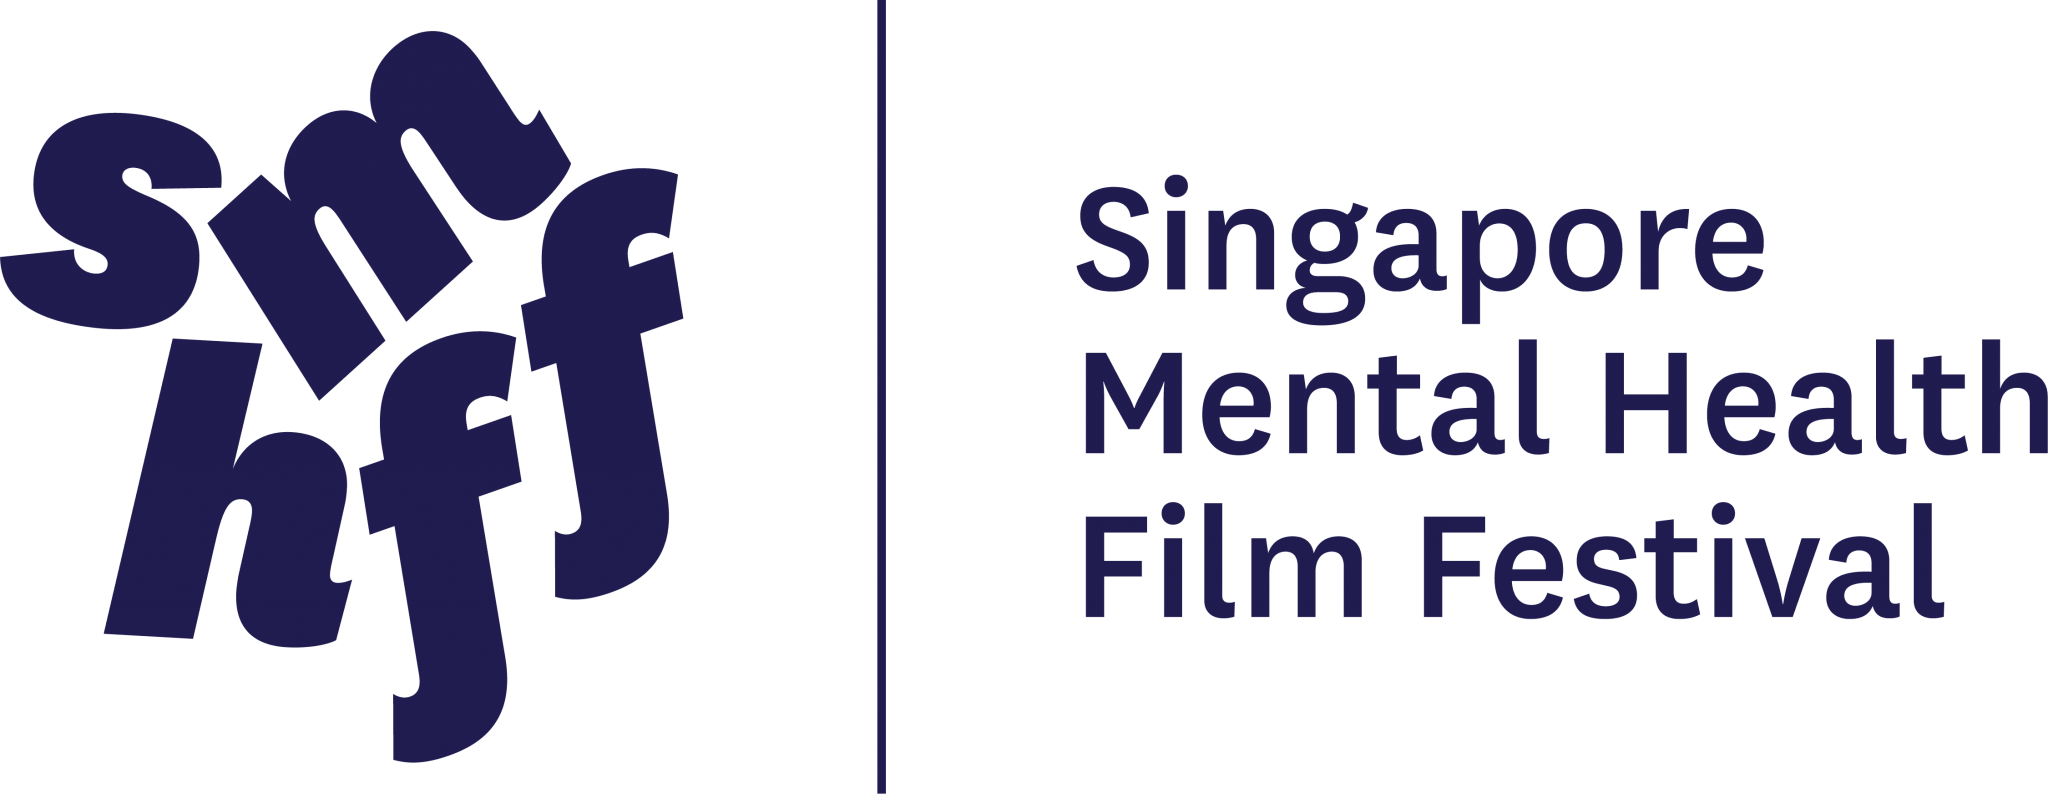  Singapore Mental Health Film Festival